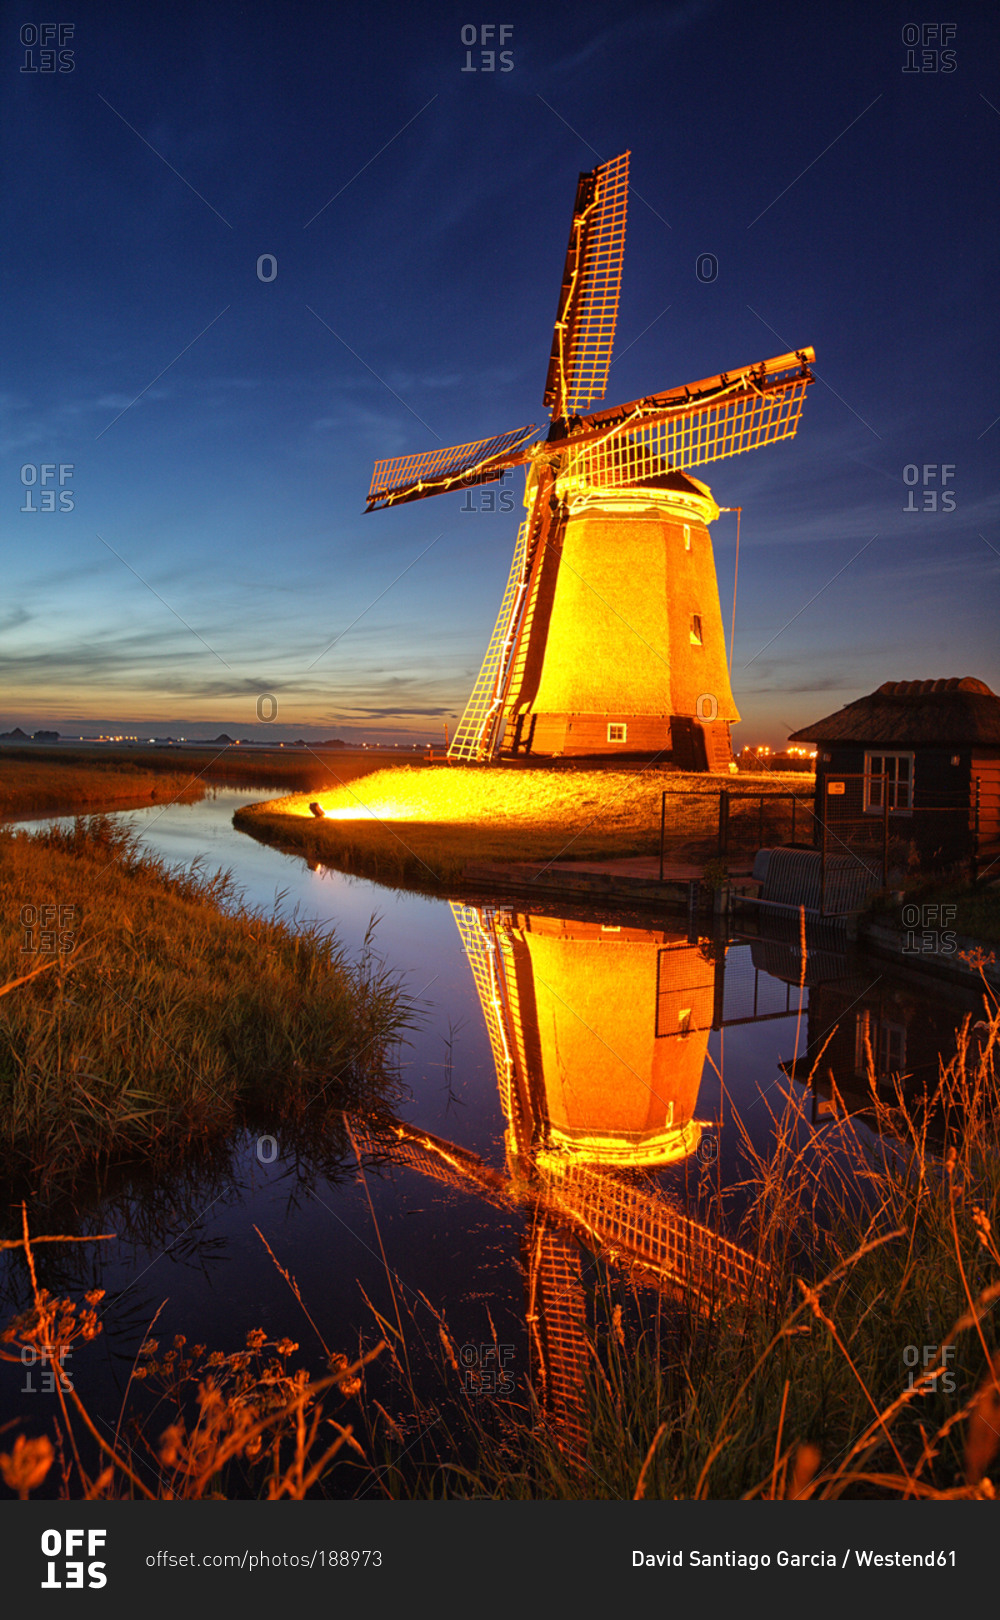 Windmill at sunset, Netherlands